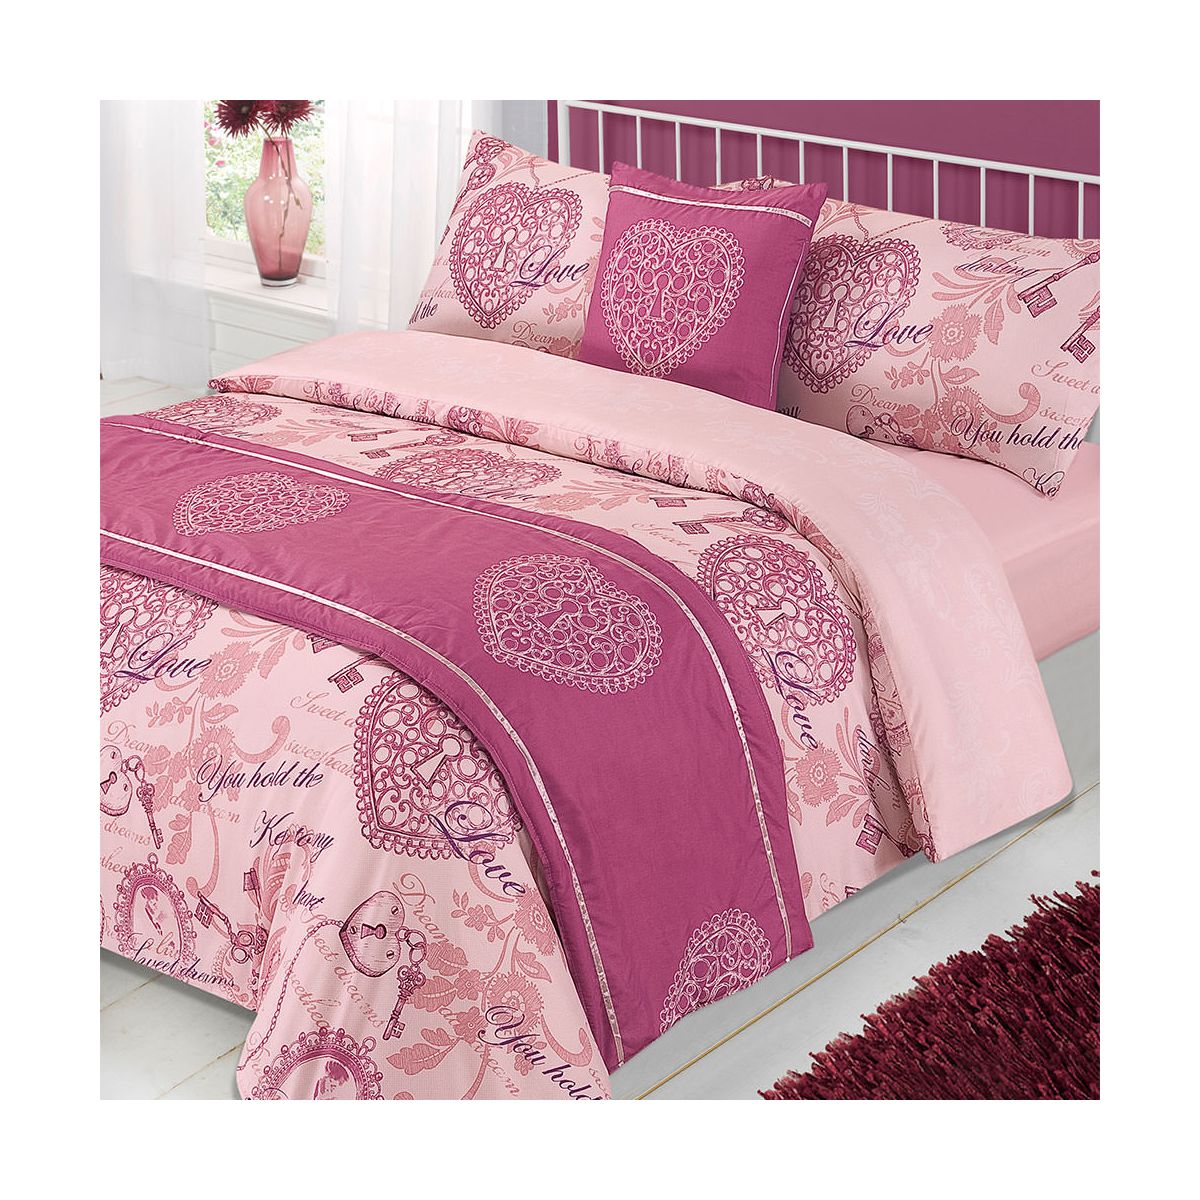 Dreamscene Antoinette Bed in a Bag Pink Love Heart Duvet Cover Set - Double